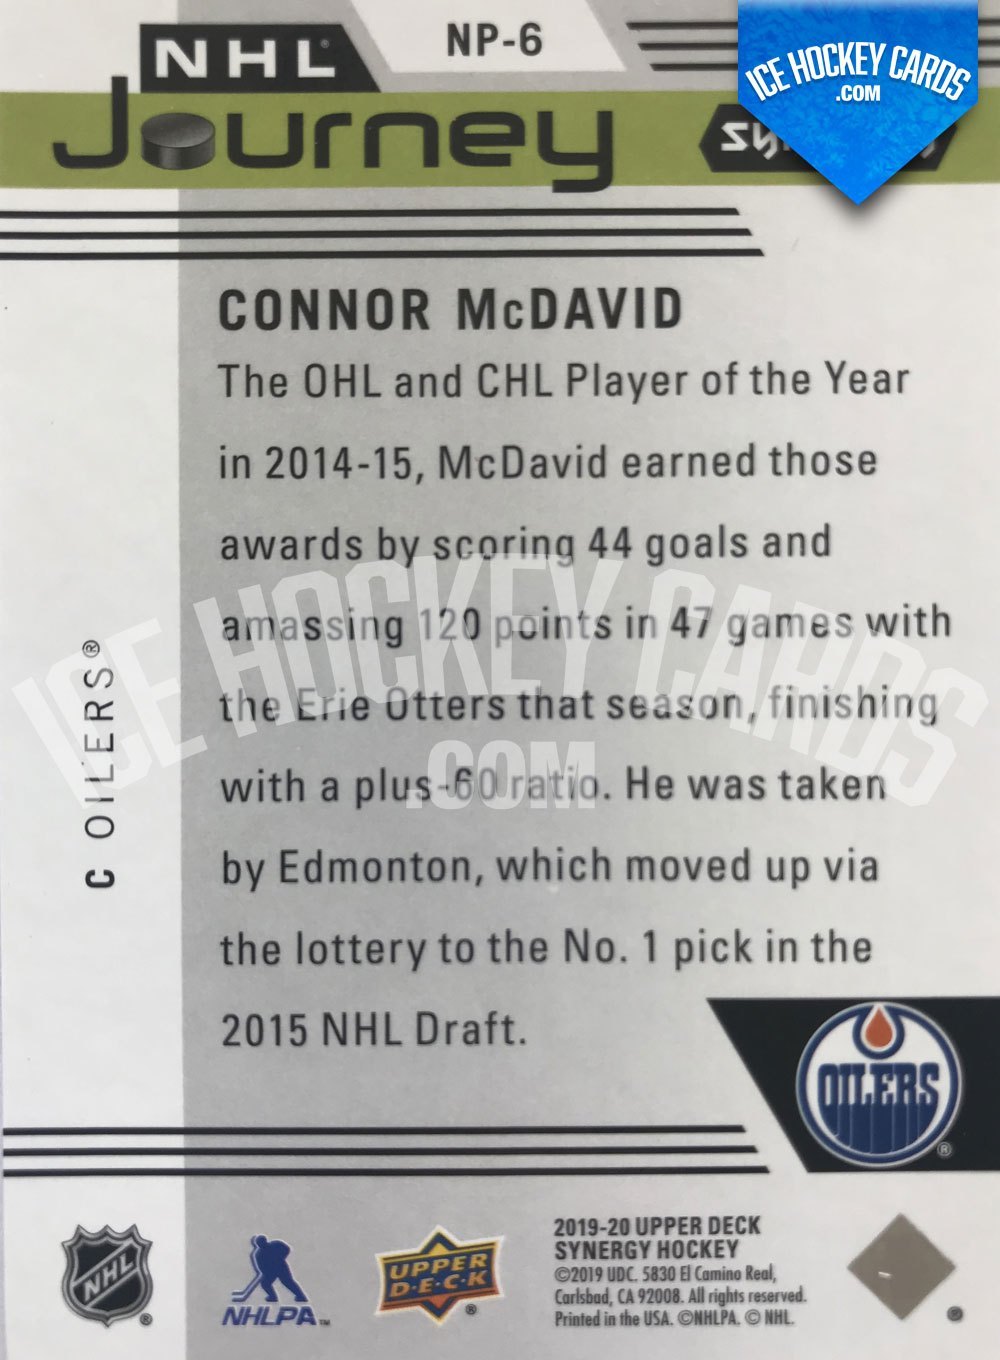 Upper Deck - Synergy 19-20 - Connor McDavid NHL Journey back